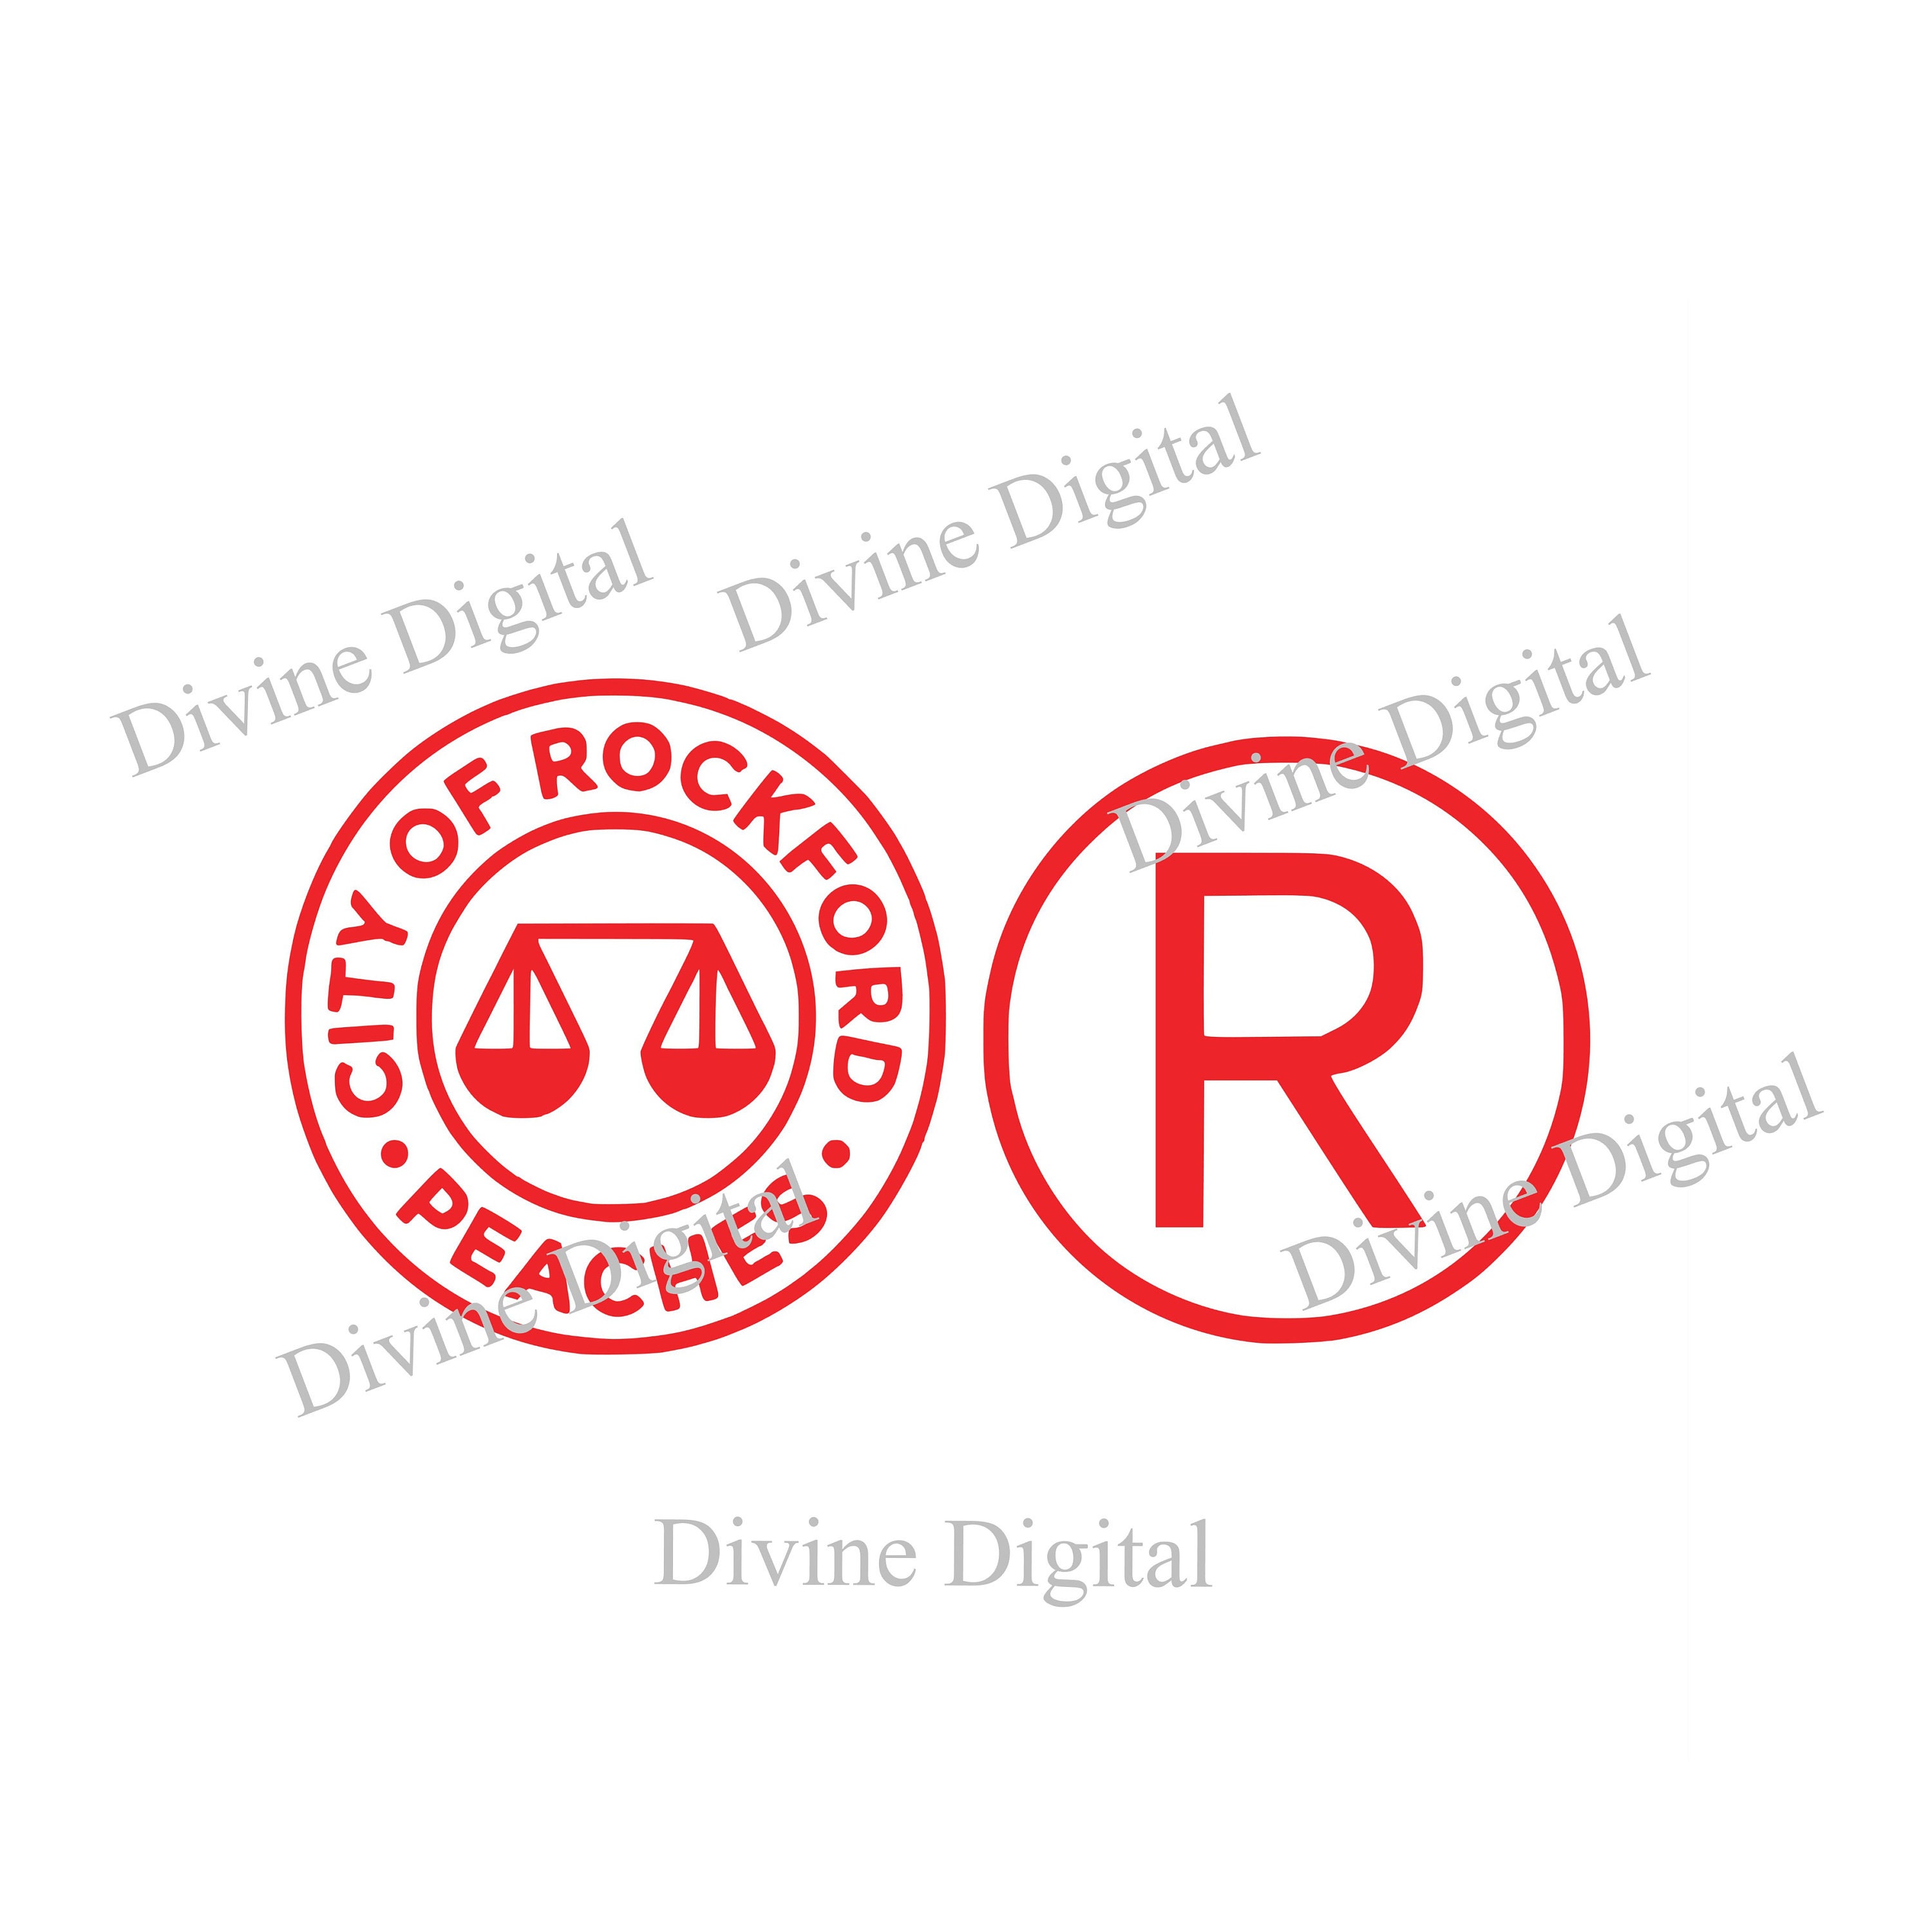 Rockford Peaches League of Their Own Logo SVG Cut File for 